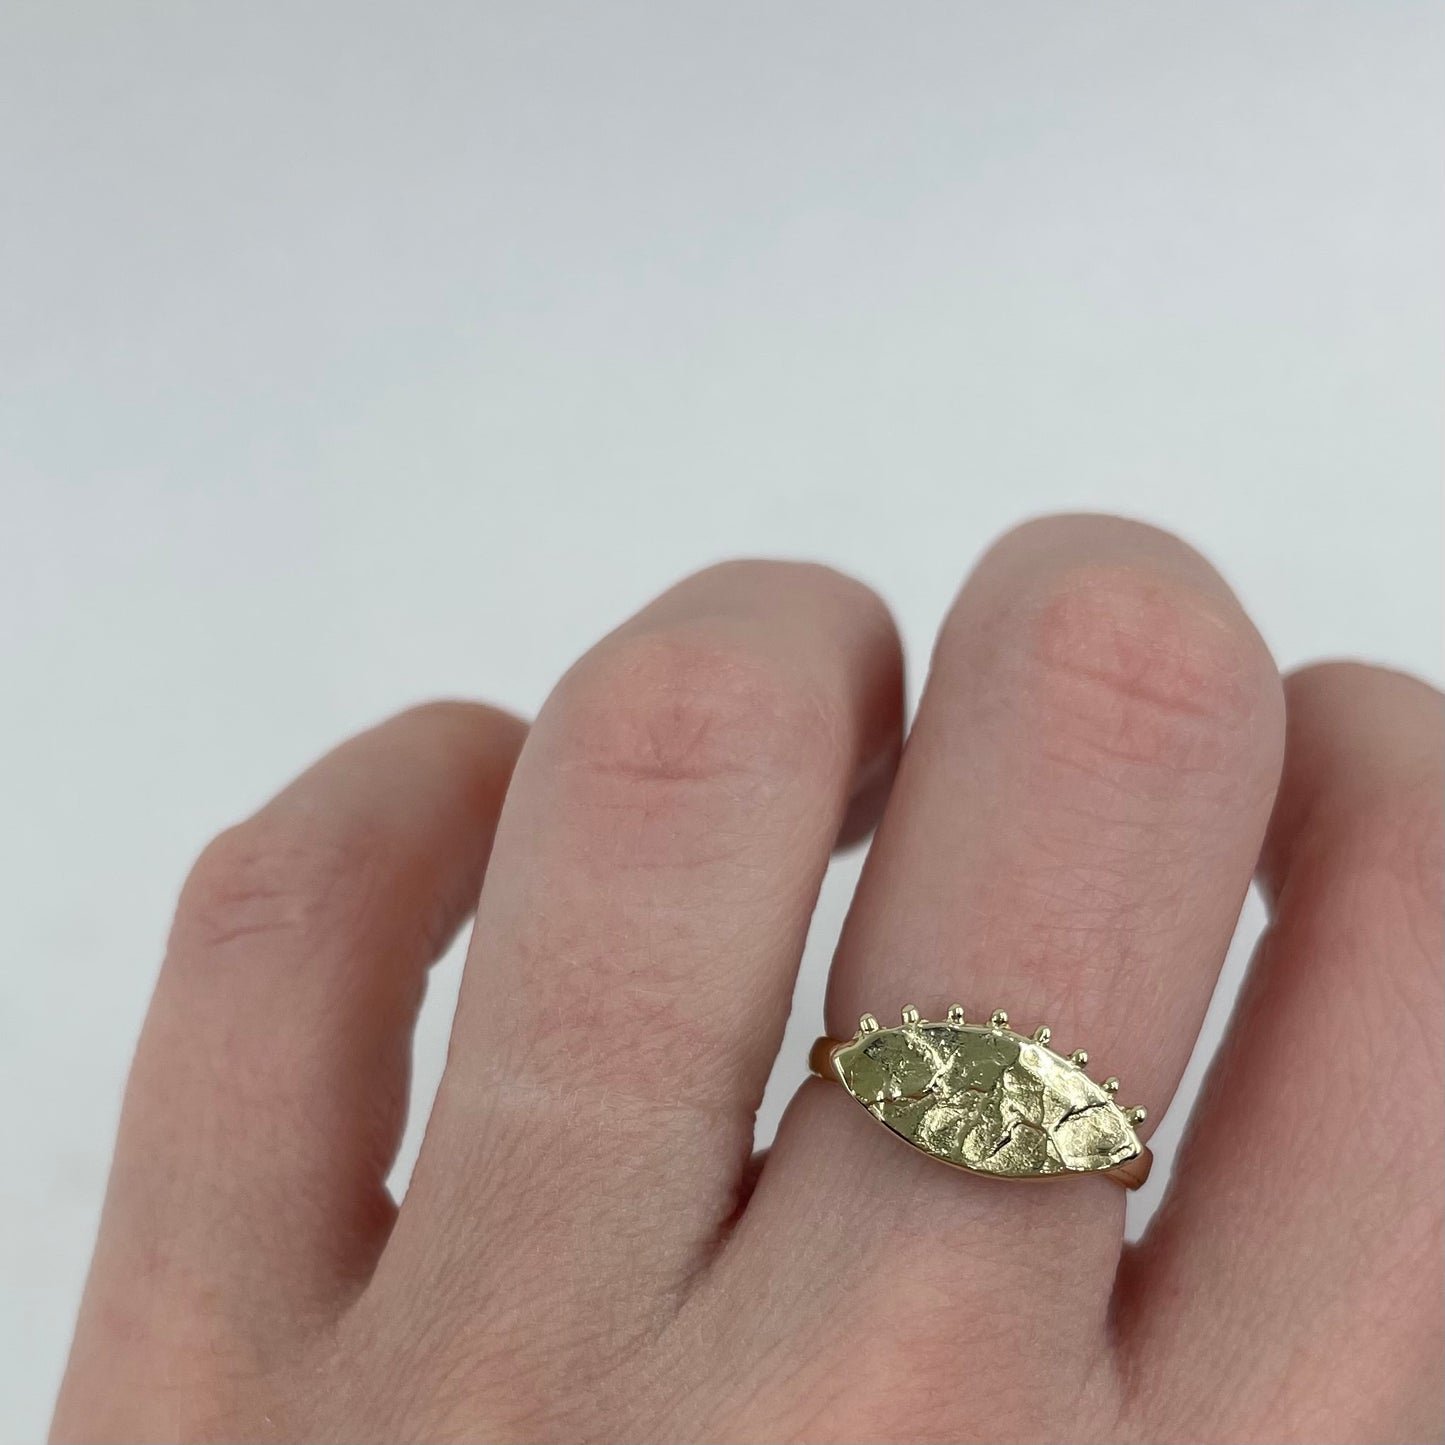 The Athena Ring